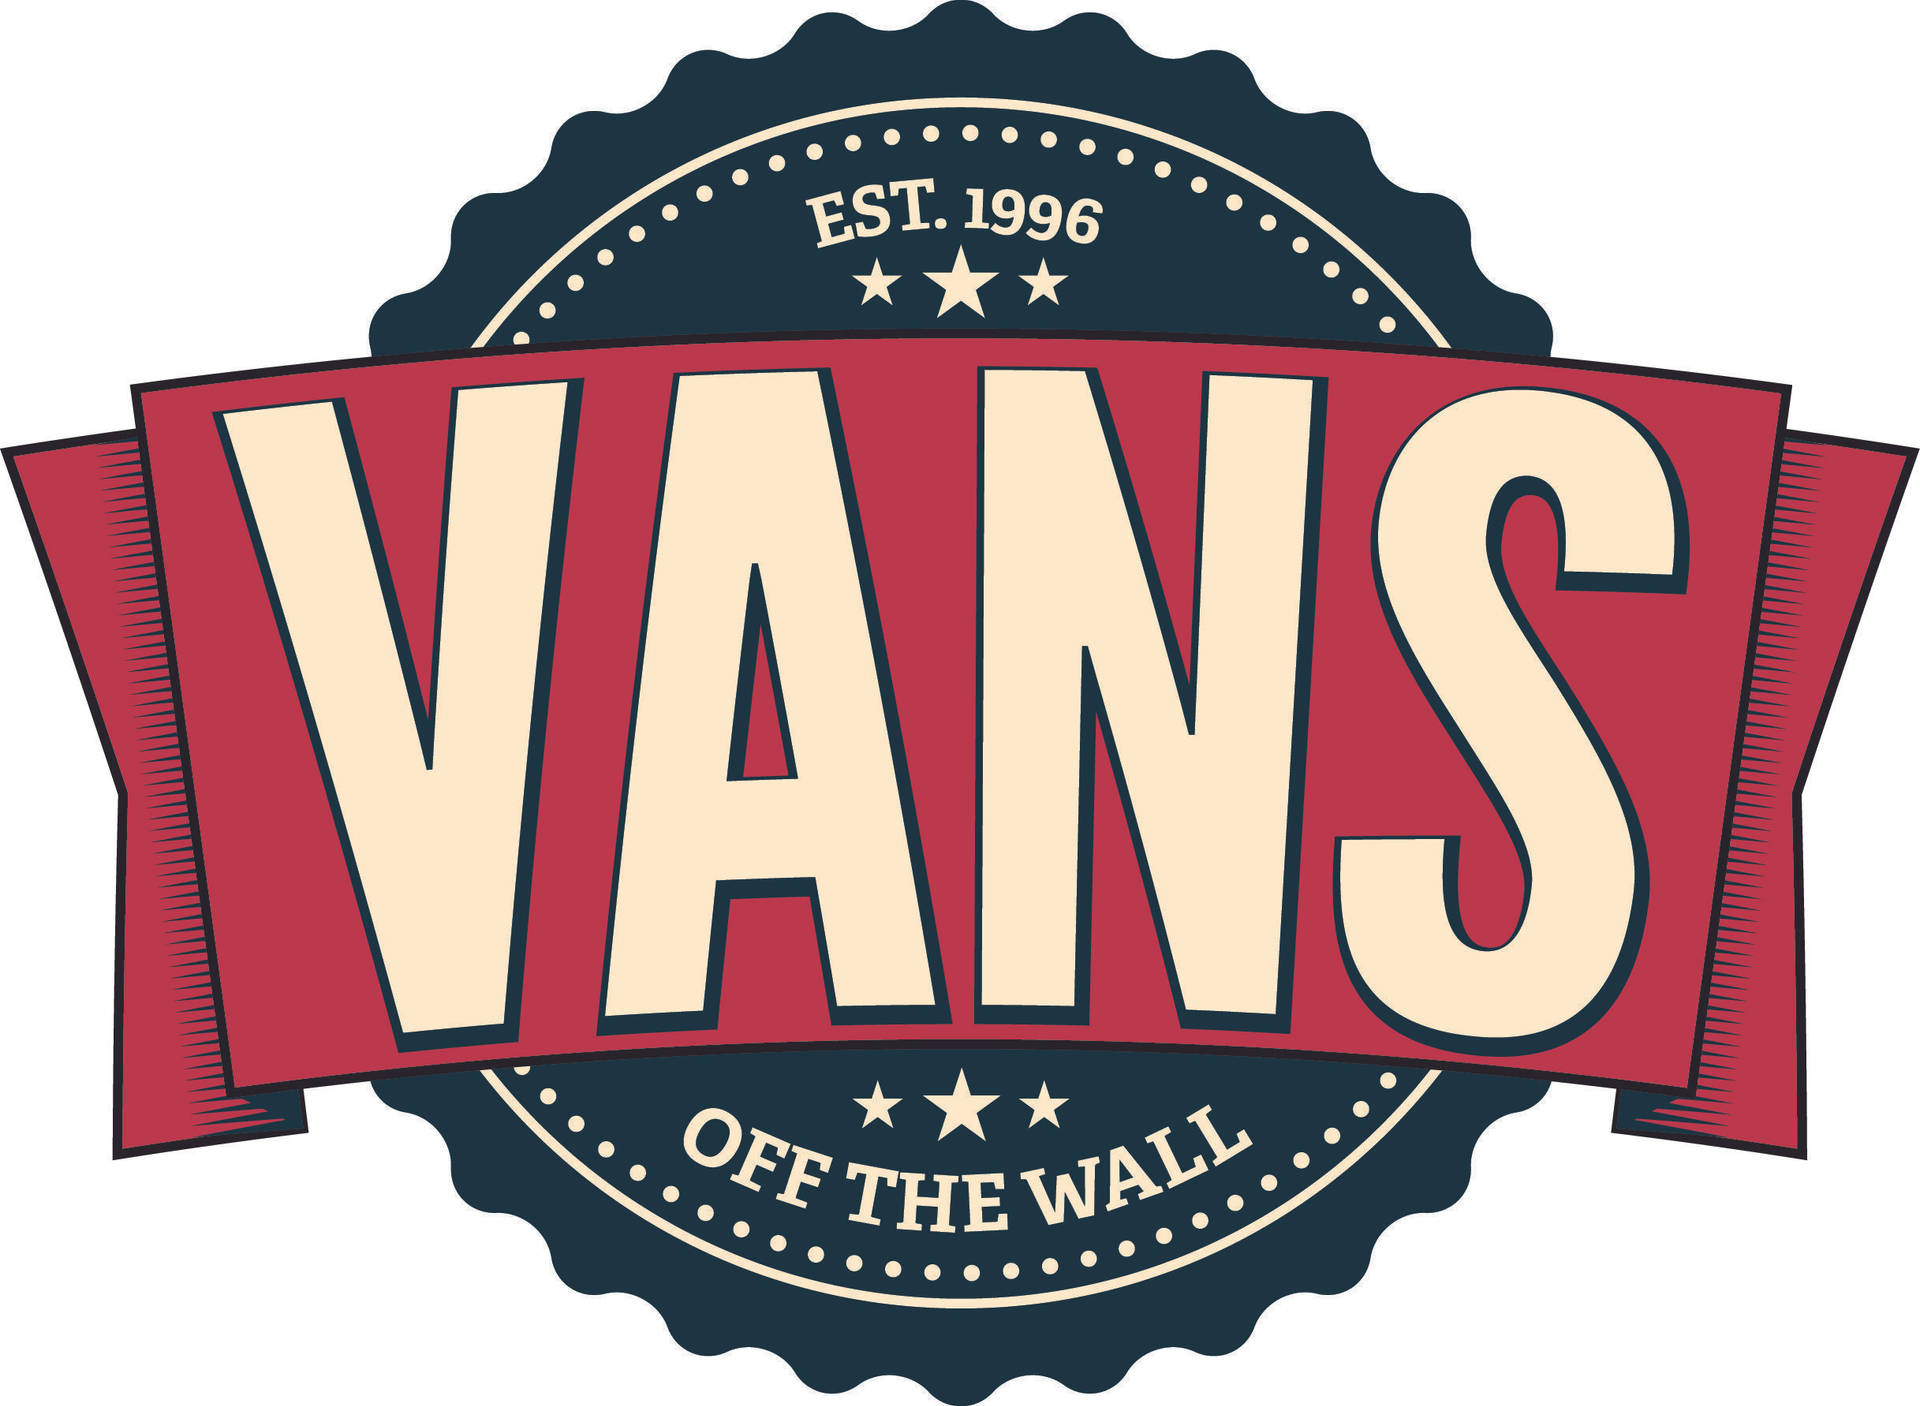 Vans Off The Wall Vintage Wallpaper